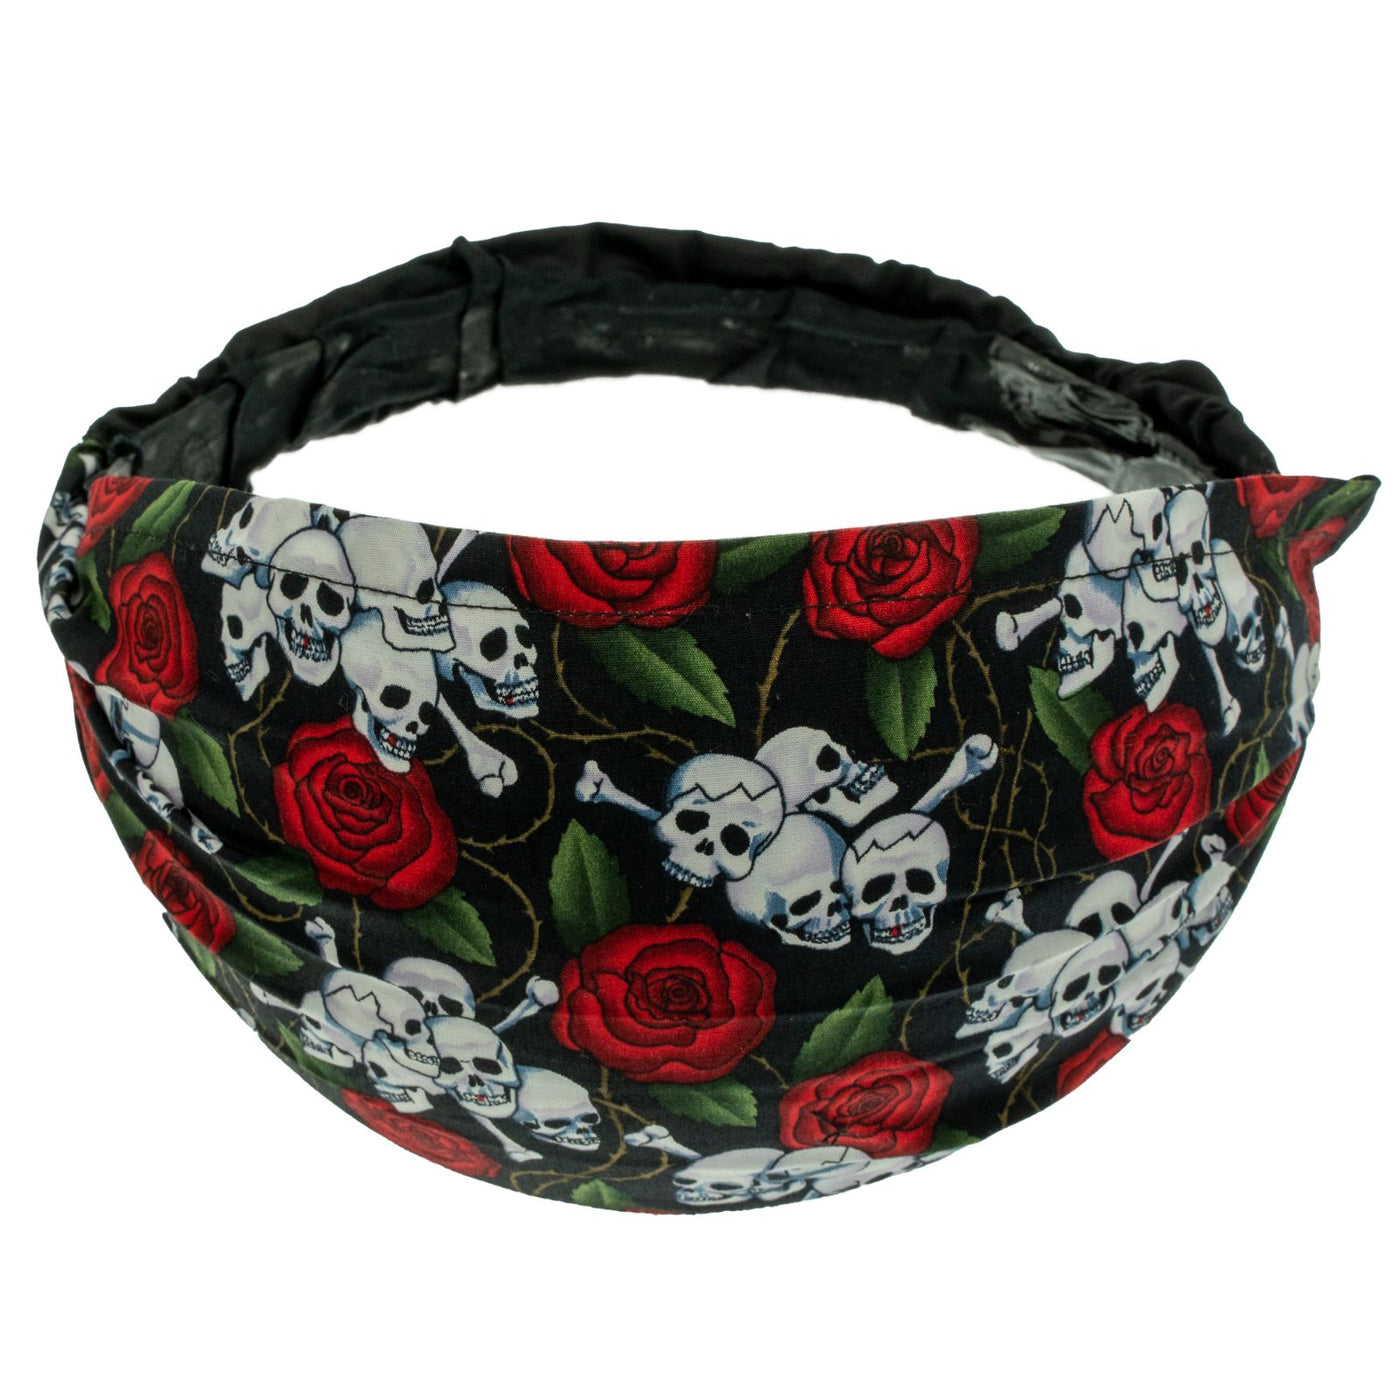 Skull & Crossbones with Red Roses Elasticated Headband